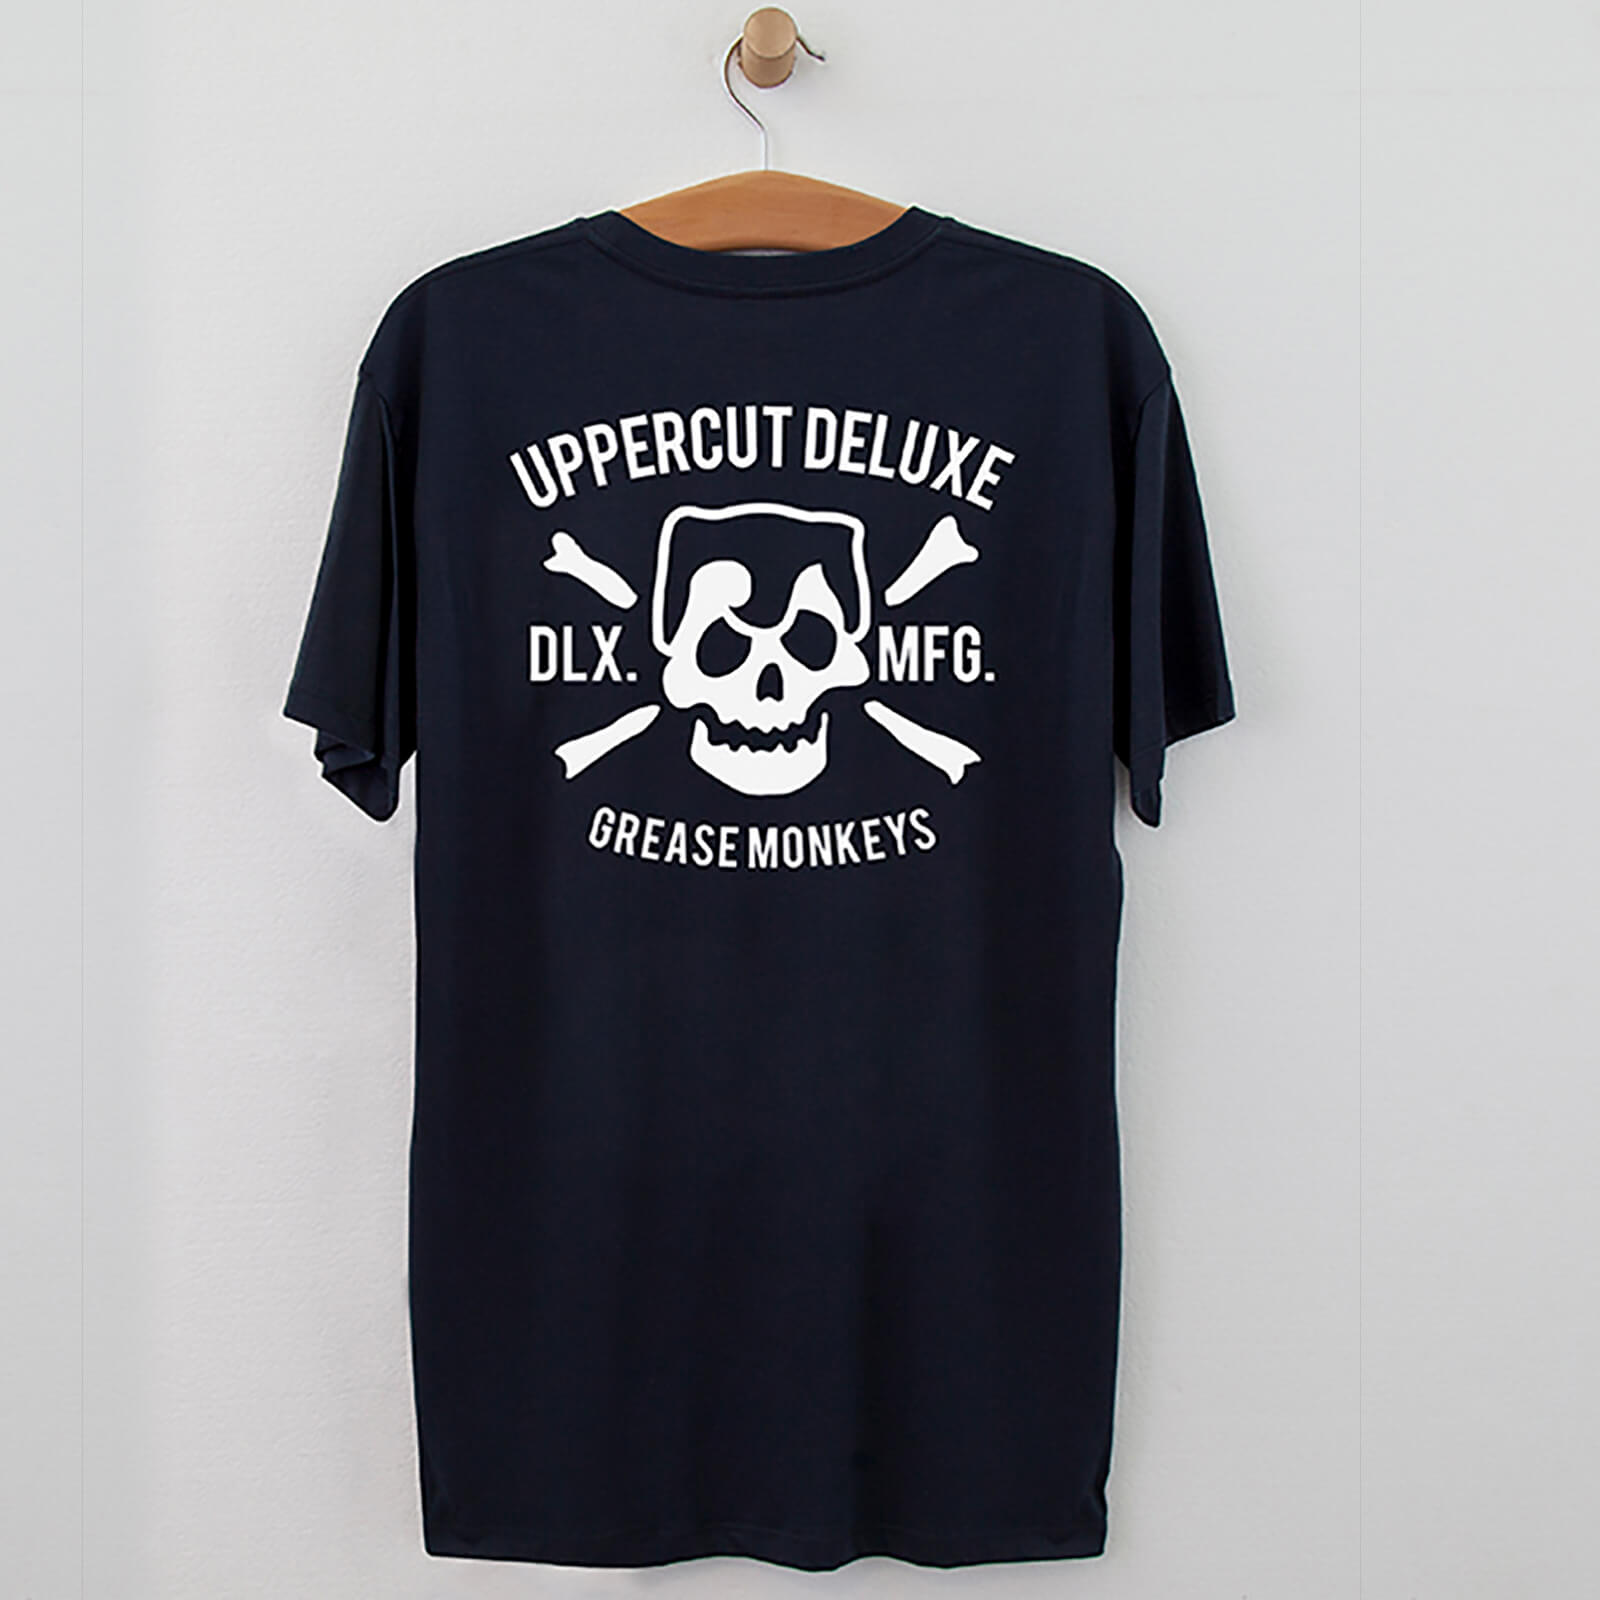 Uppercut Grease Monkey Lives T-Shirt - Navy/White Print - S - Navy/White